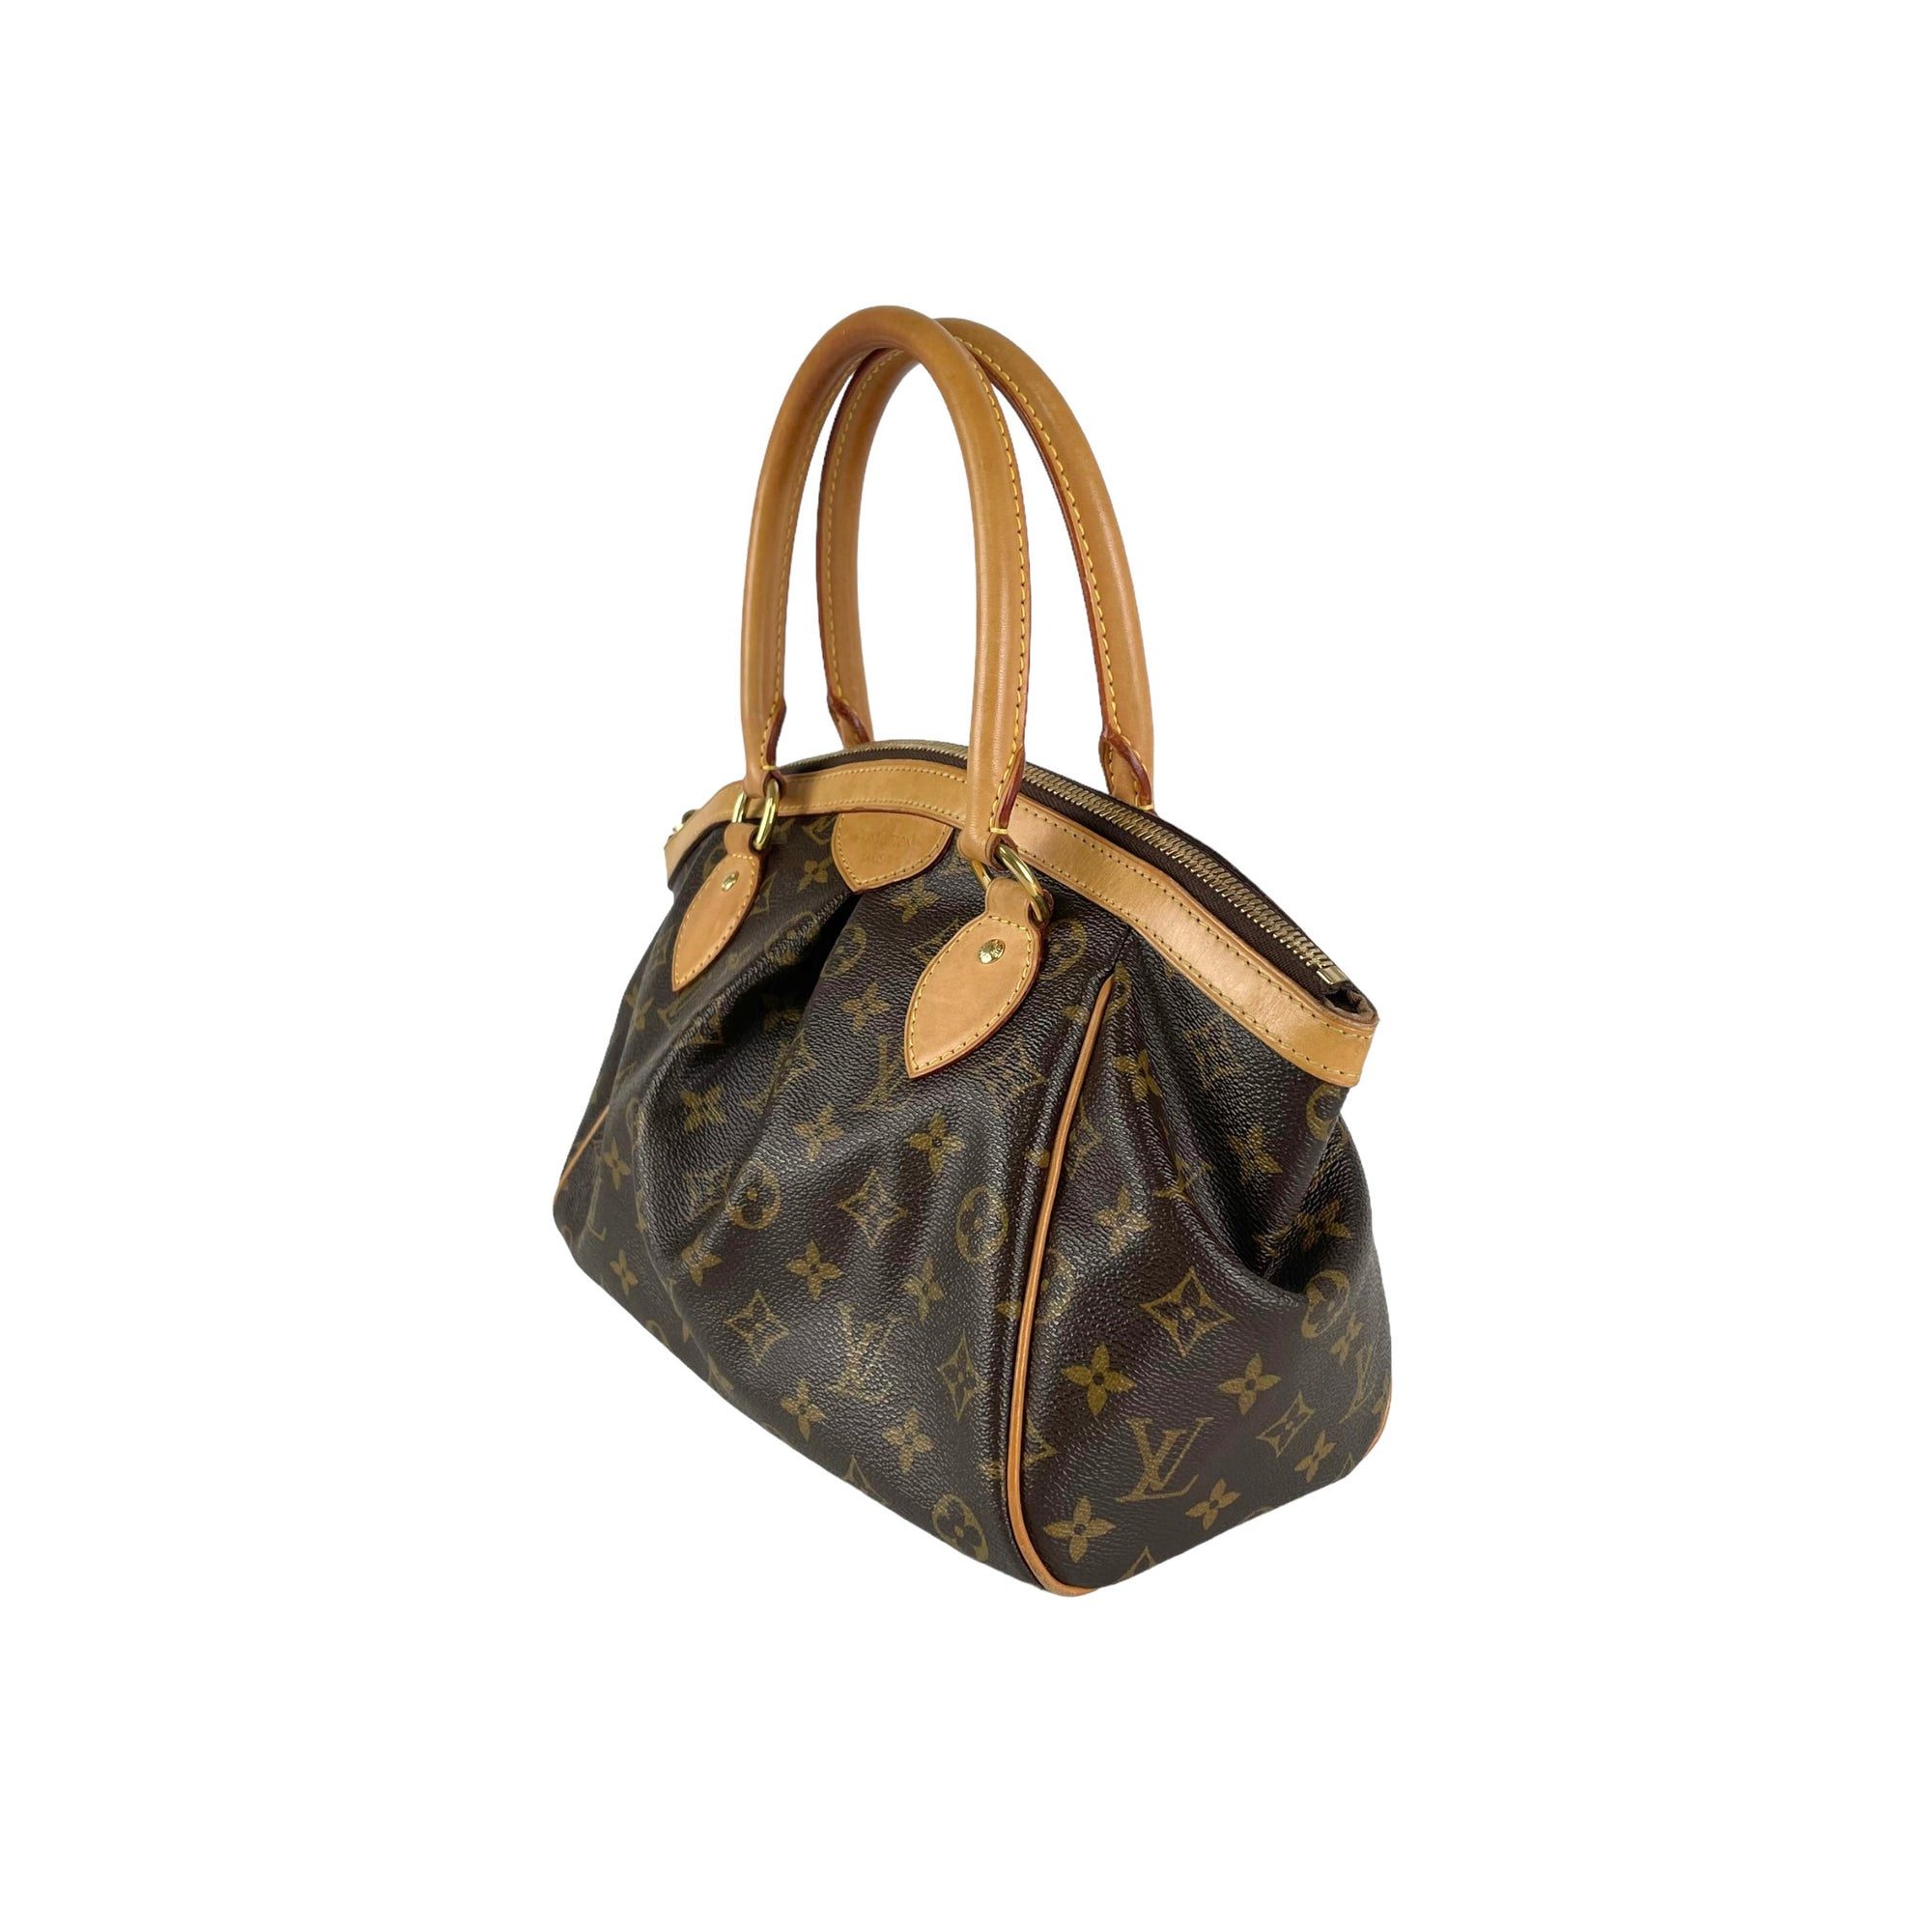 Louis Vuitton, Bags, Bundledlouis Vuitton Tivoli Pm